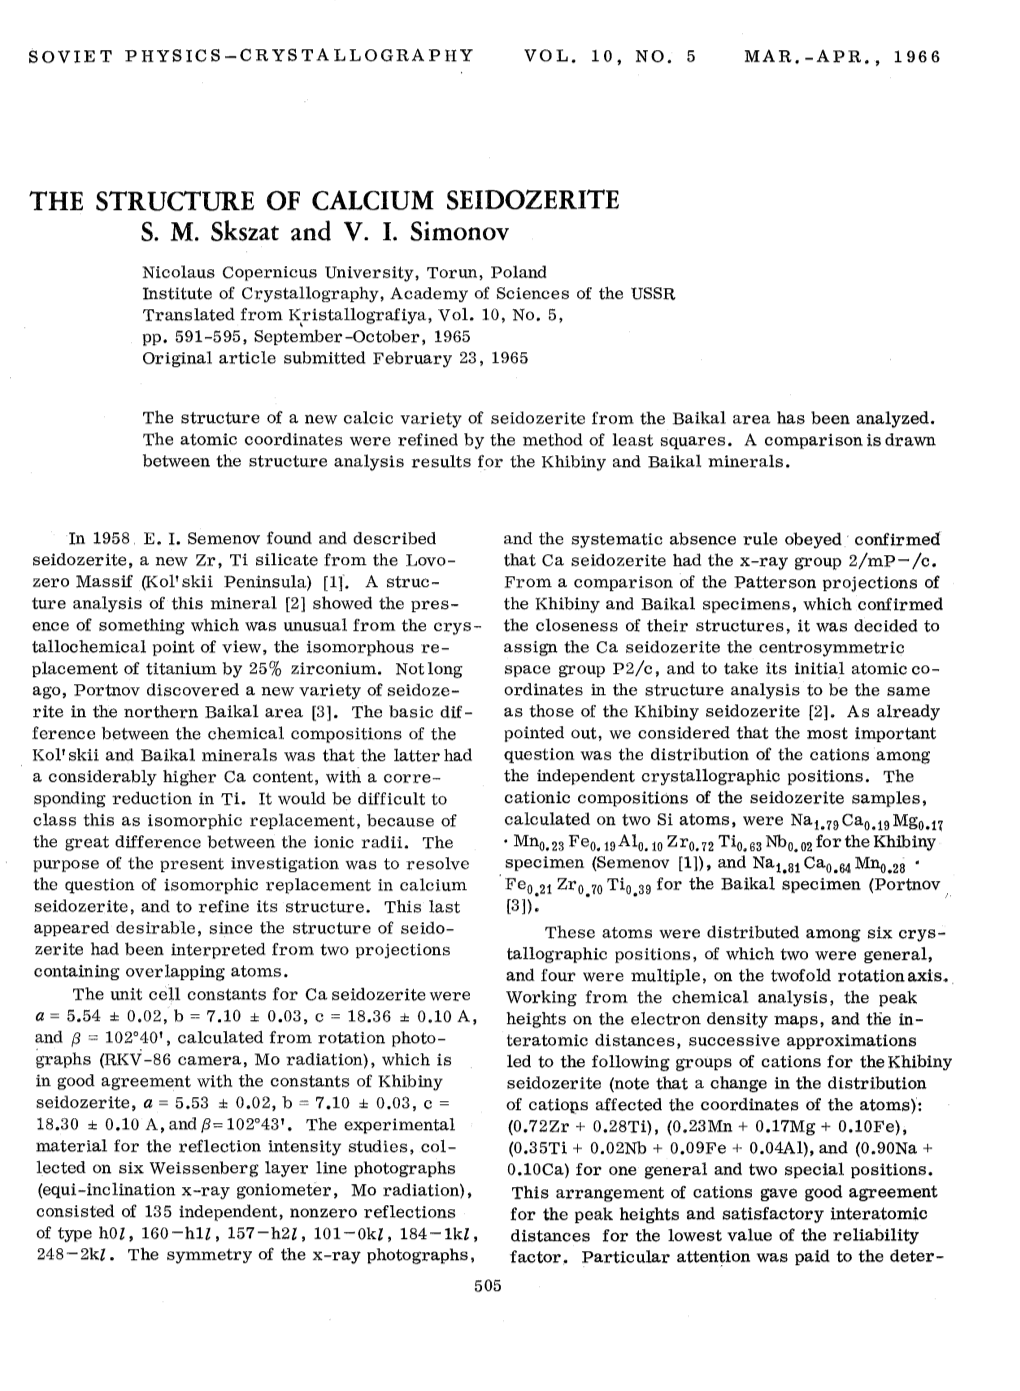 THE STRUCTURE of CALCIUM SEIDOZERITE S. M. Skszat and V. I. Simonov